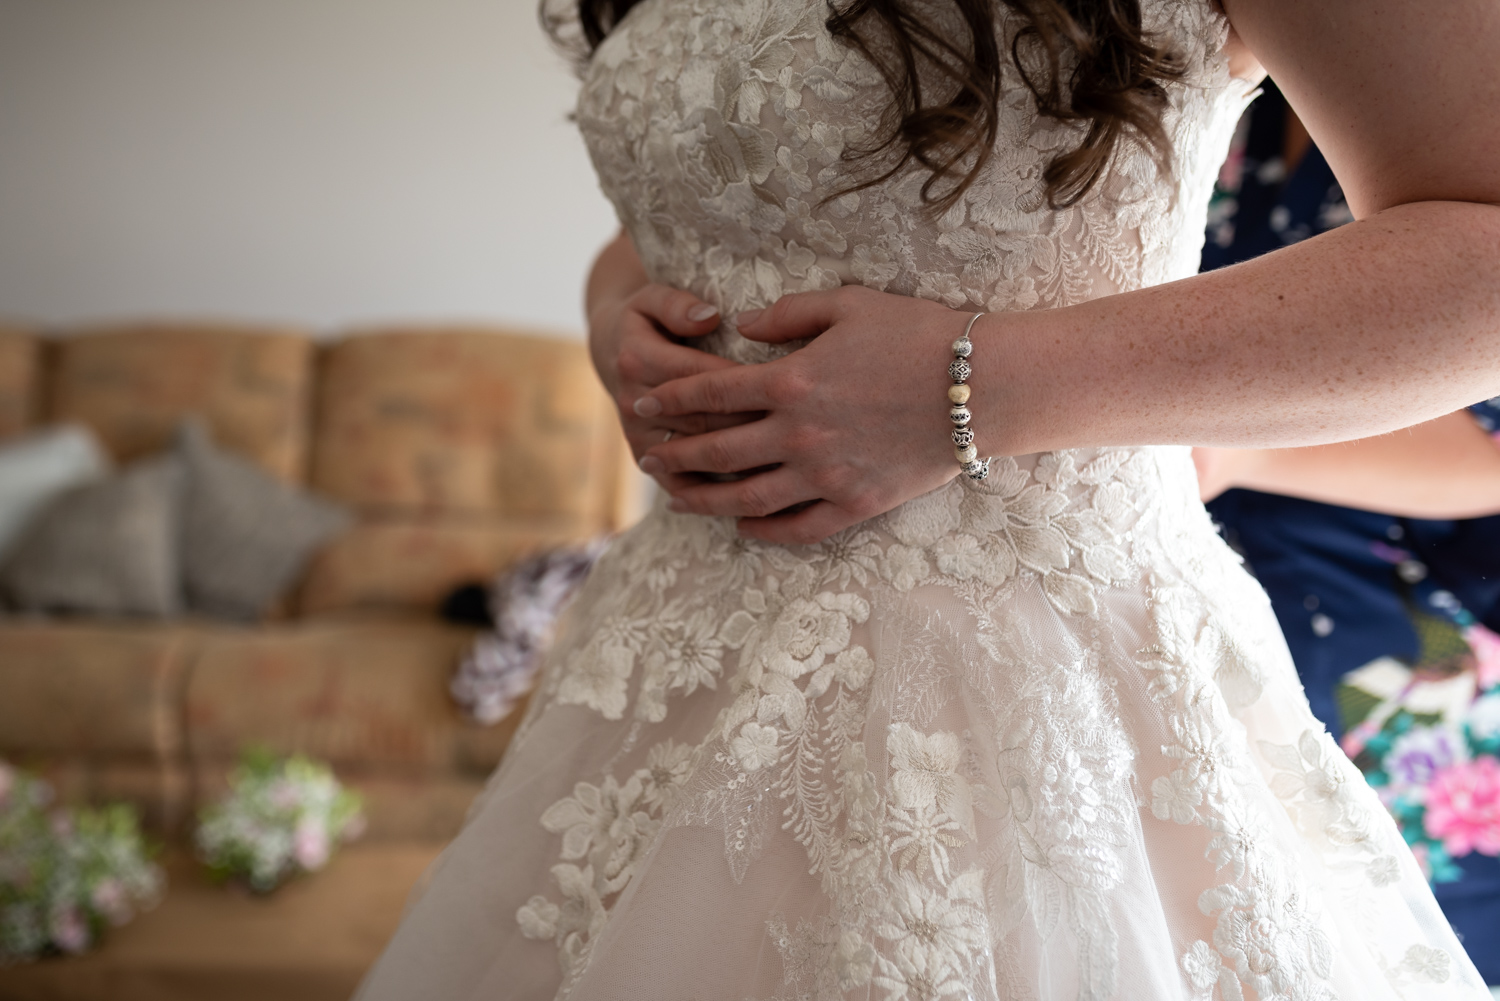 Brides hands on dress